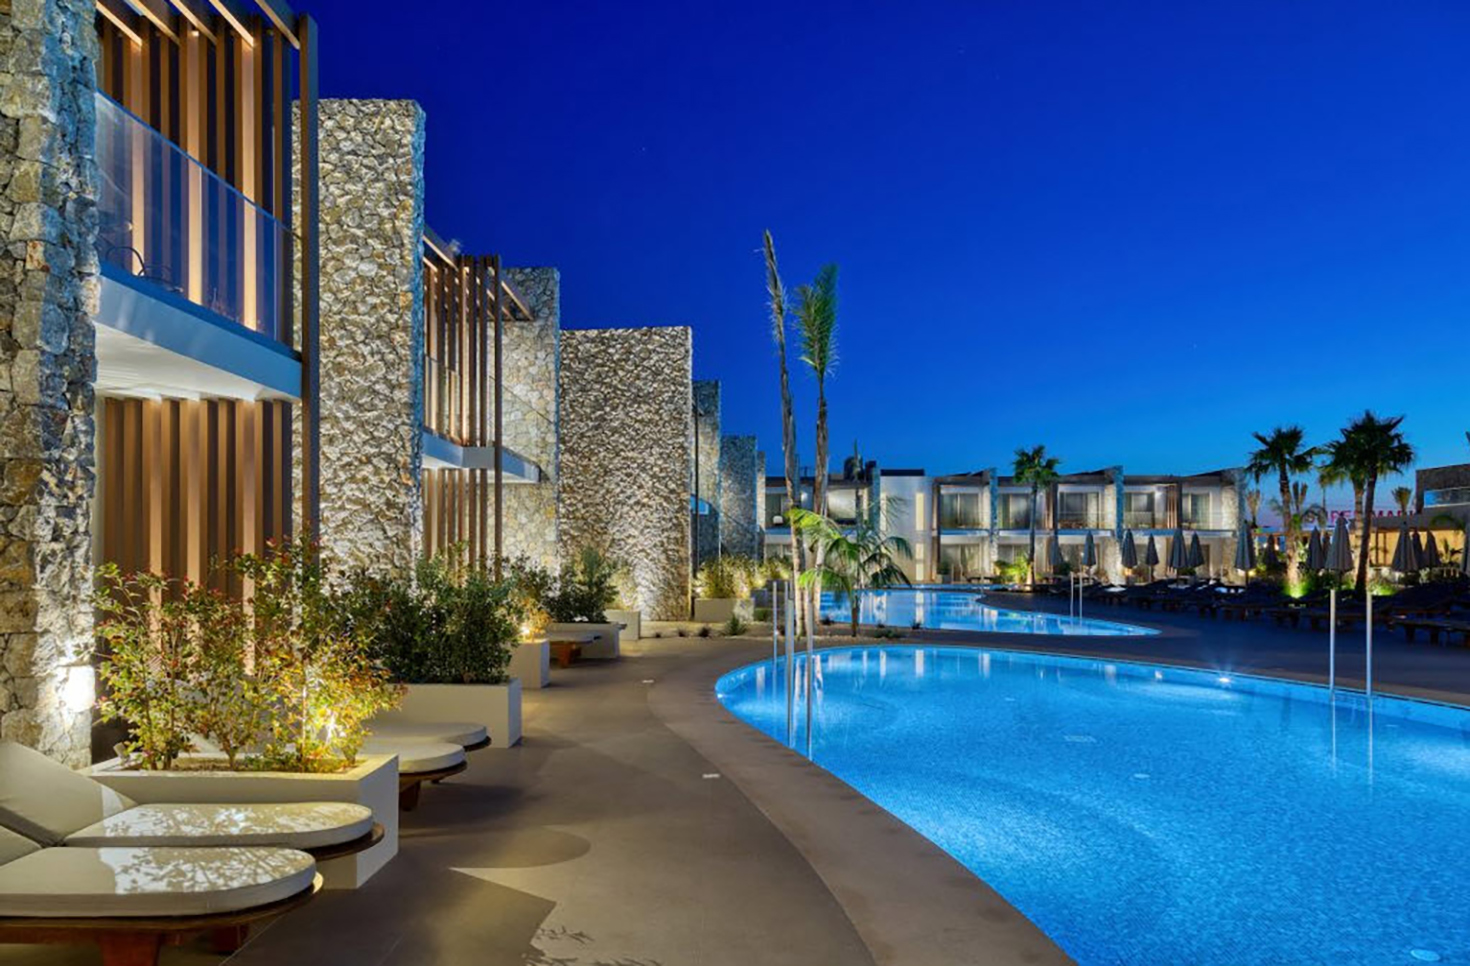 Utopia Blu Hotel: Ένα πολυτελές ξενοδοχείο 5 αστέρων δια χειρός Λακιώτη